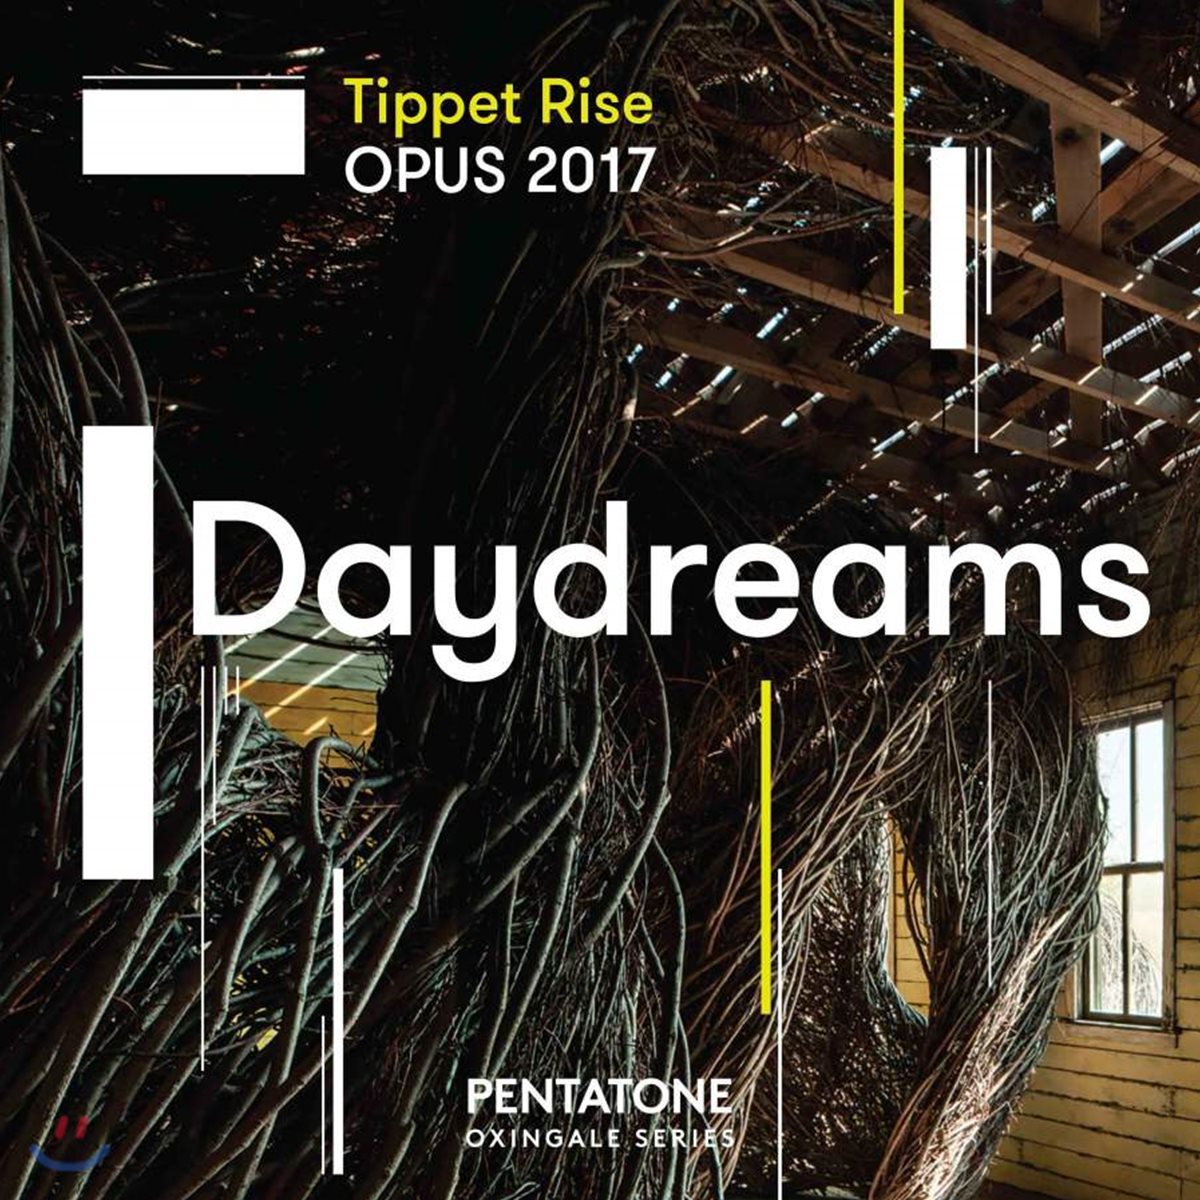 Matt Haimovitz / Yevgeny Sudbin 티펫 라이즈 오푸스 2017: 데이드림 - 매트 하이모비츠 / 예프게니 수드빈 (Tippet Rise OPUS 2017: Daydreams)